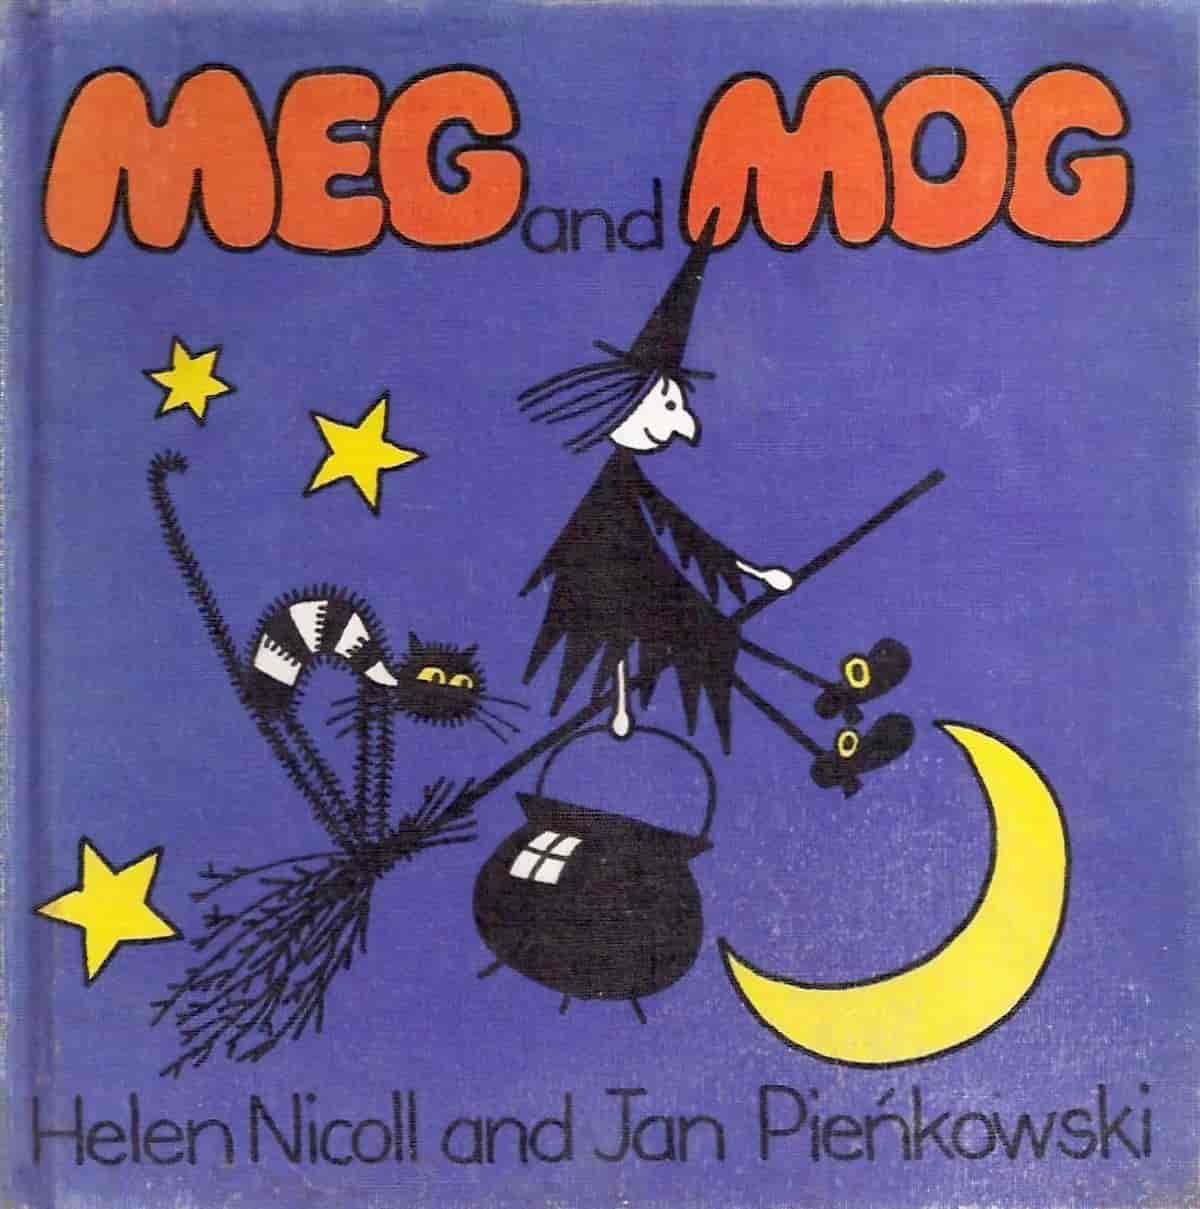 Meg and Mog by Helen Nicoll and Jan Pienkowski Analysis